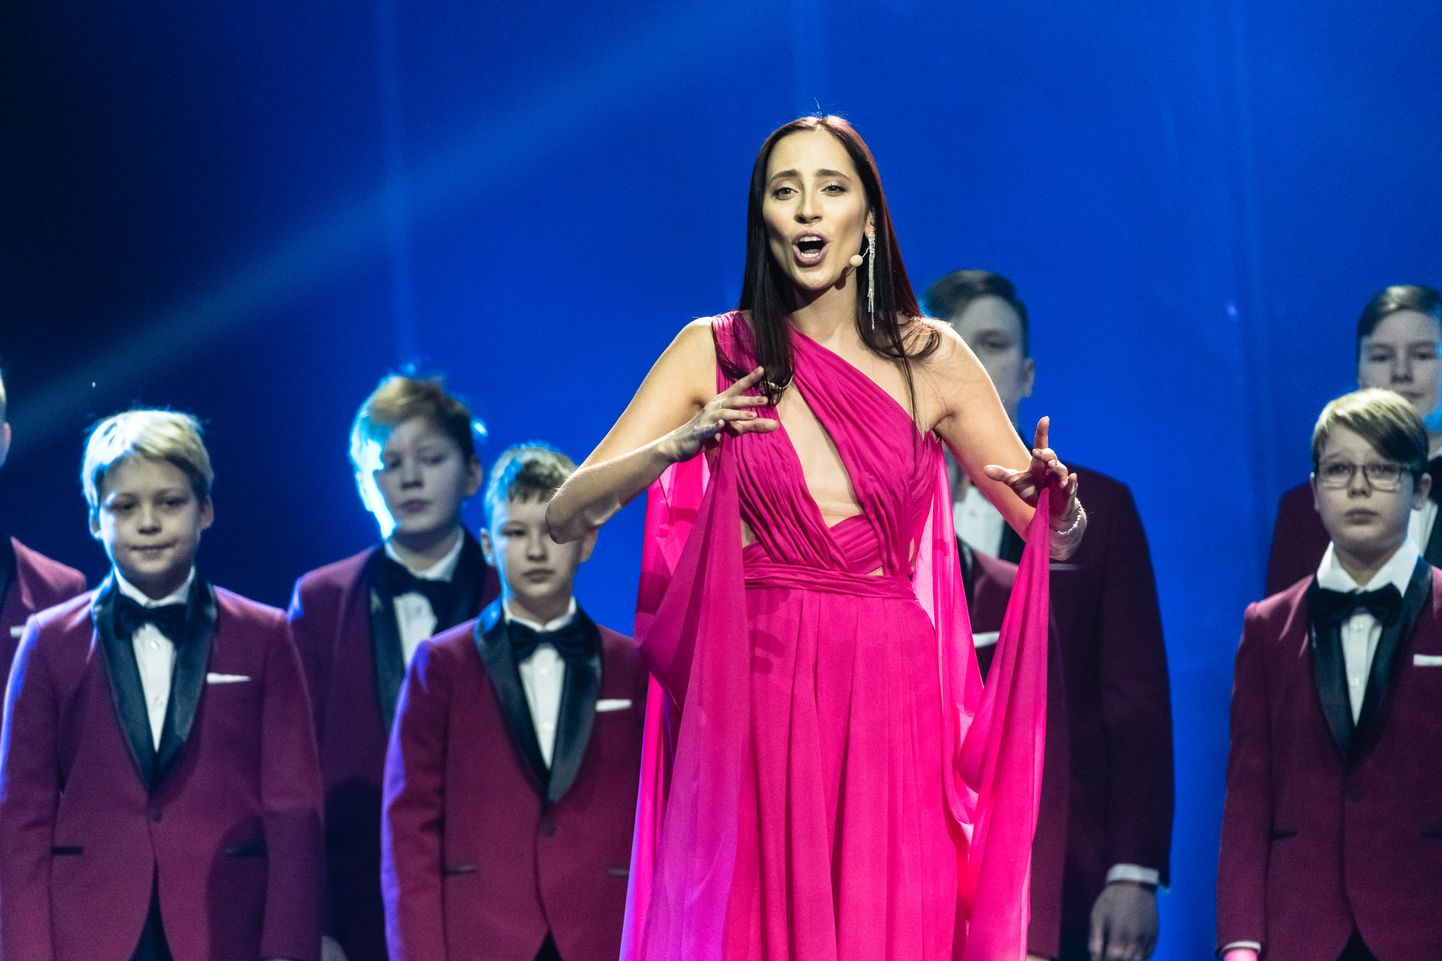 Eesti Laul 2019, finaali peaproov: Elina Nechayeva